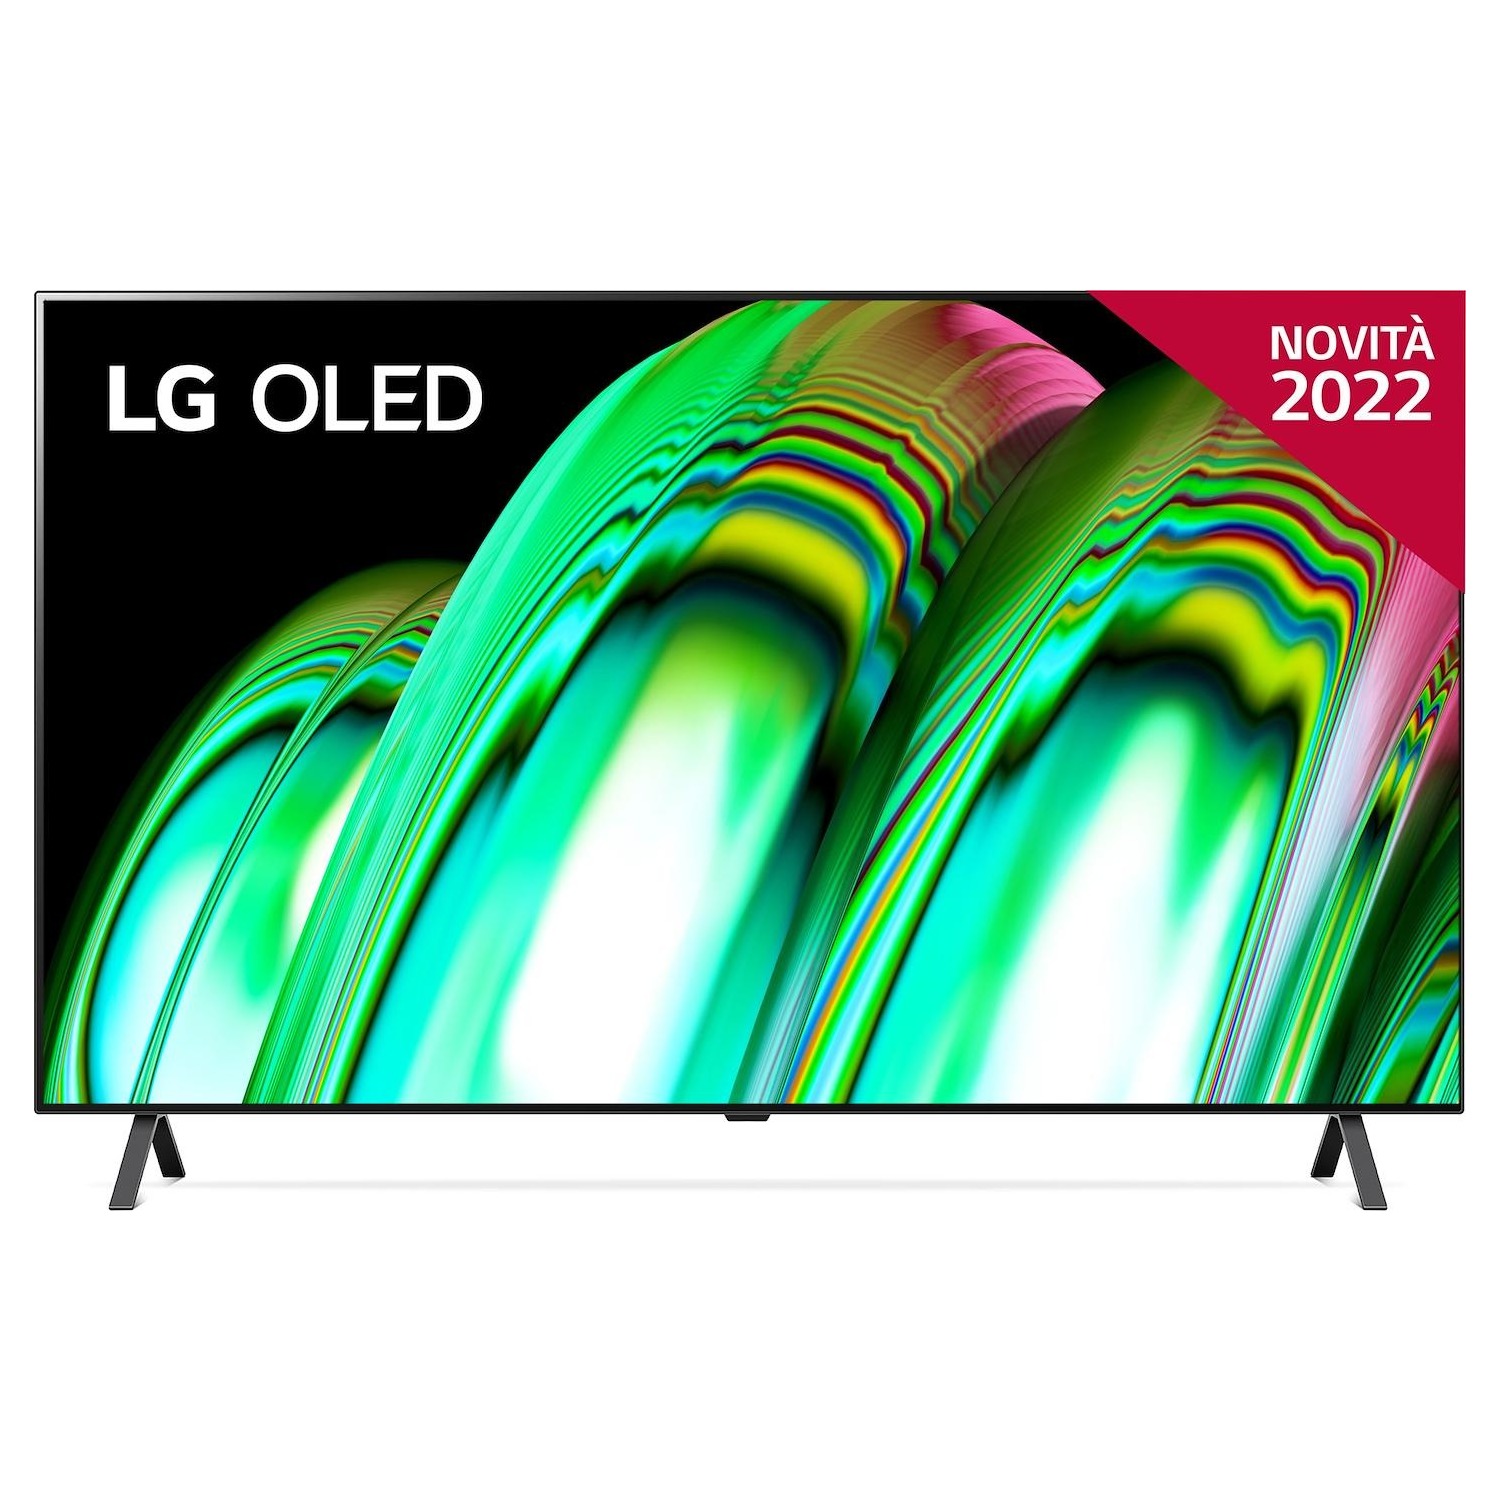 Immagine per TV OLED LG OLED55A26 Calibrato 4K e FULL HD da DIMOStore